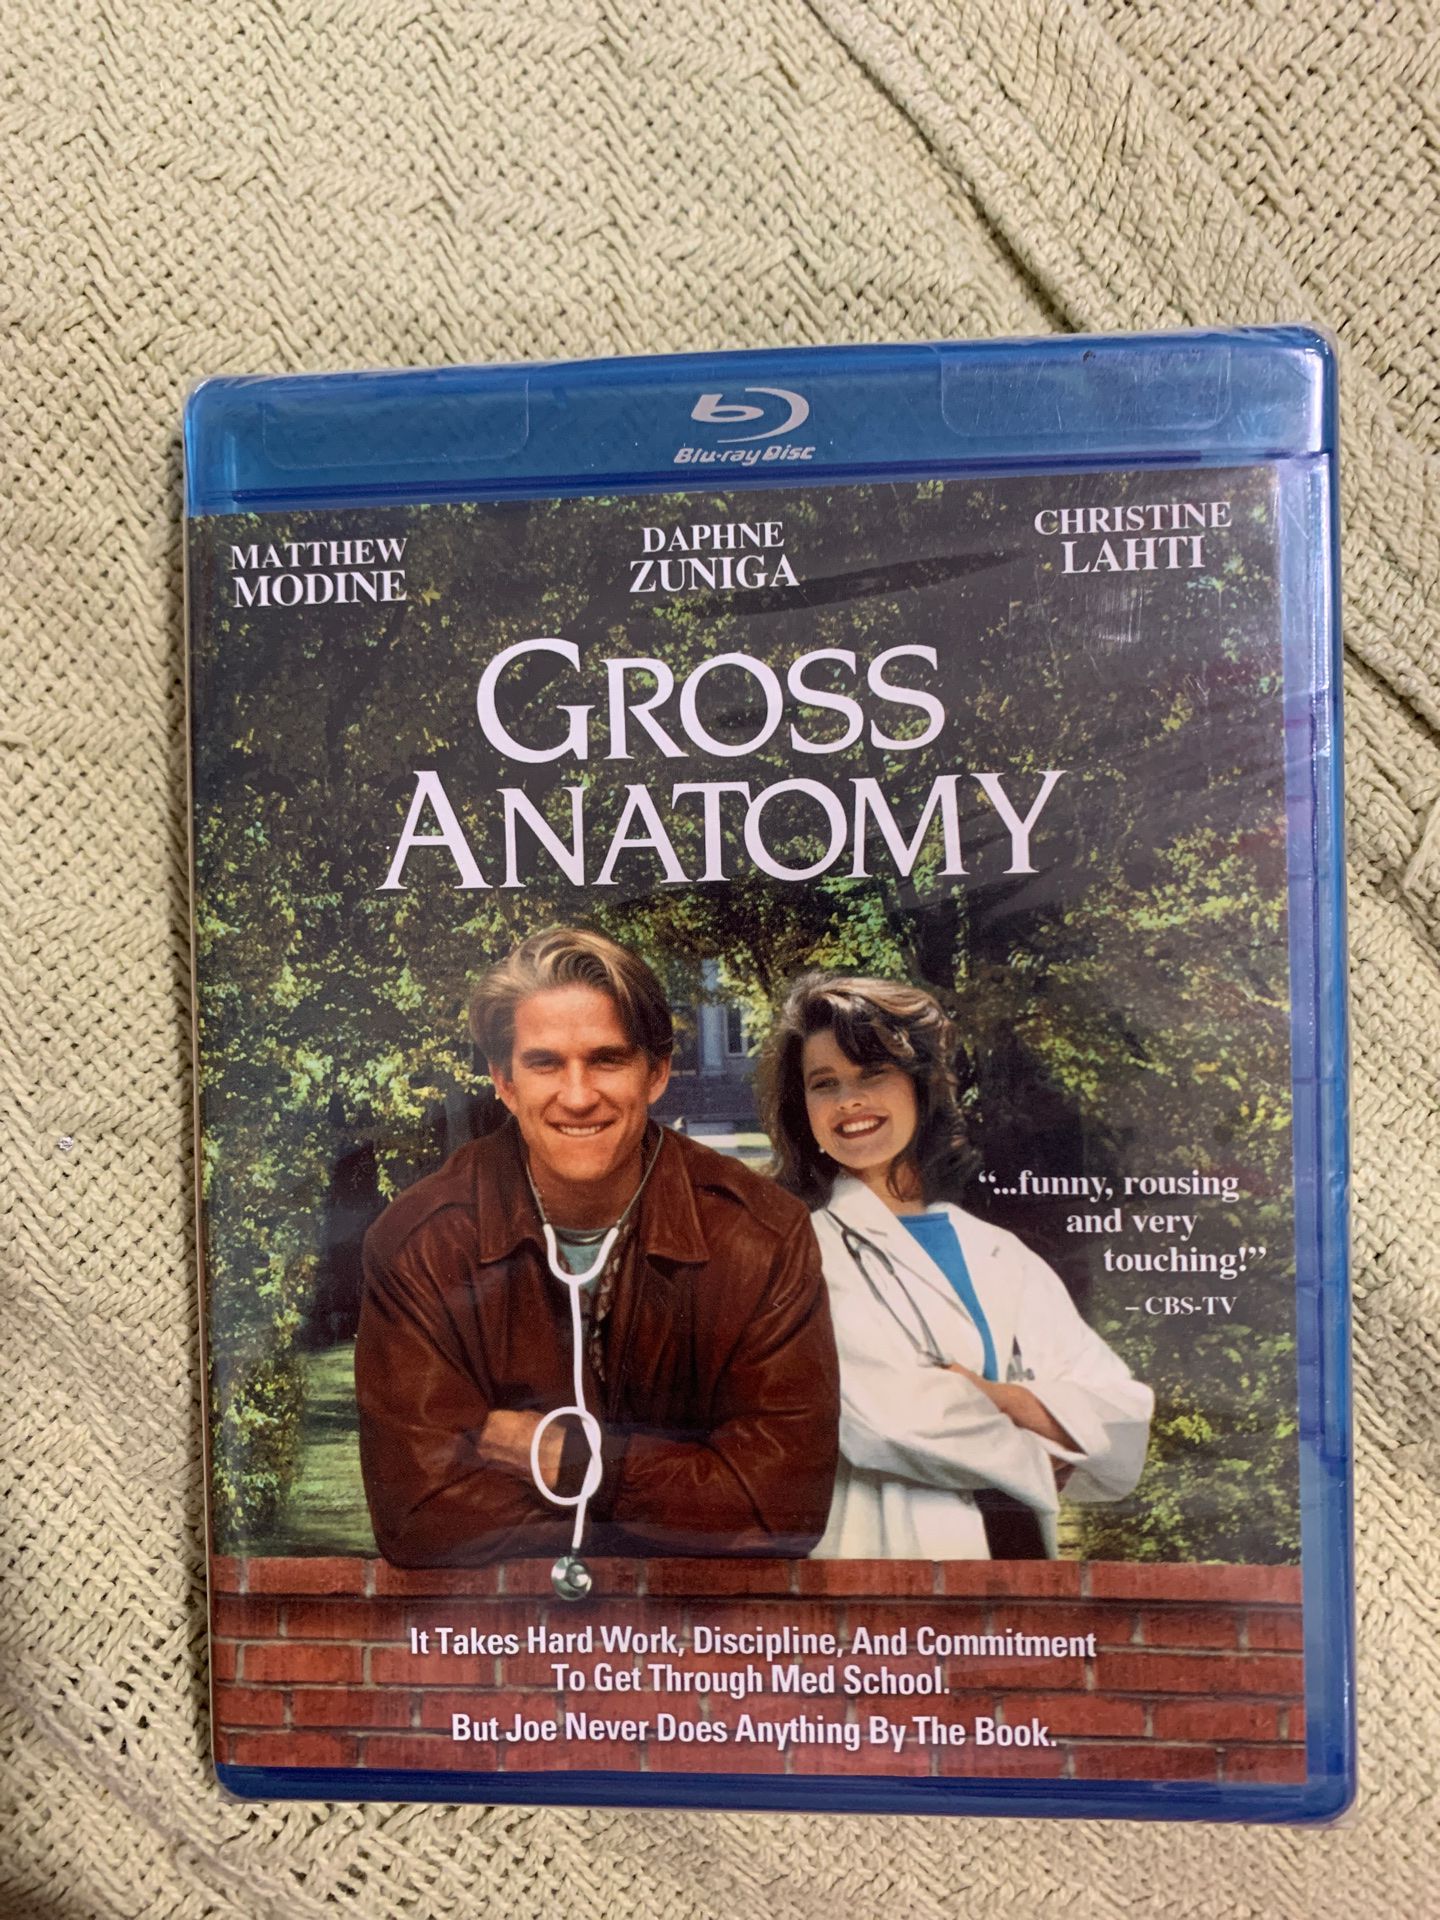 Cross Anatomy Blu-Ray DVD